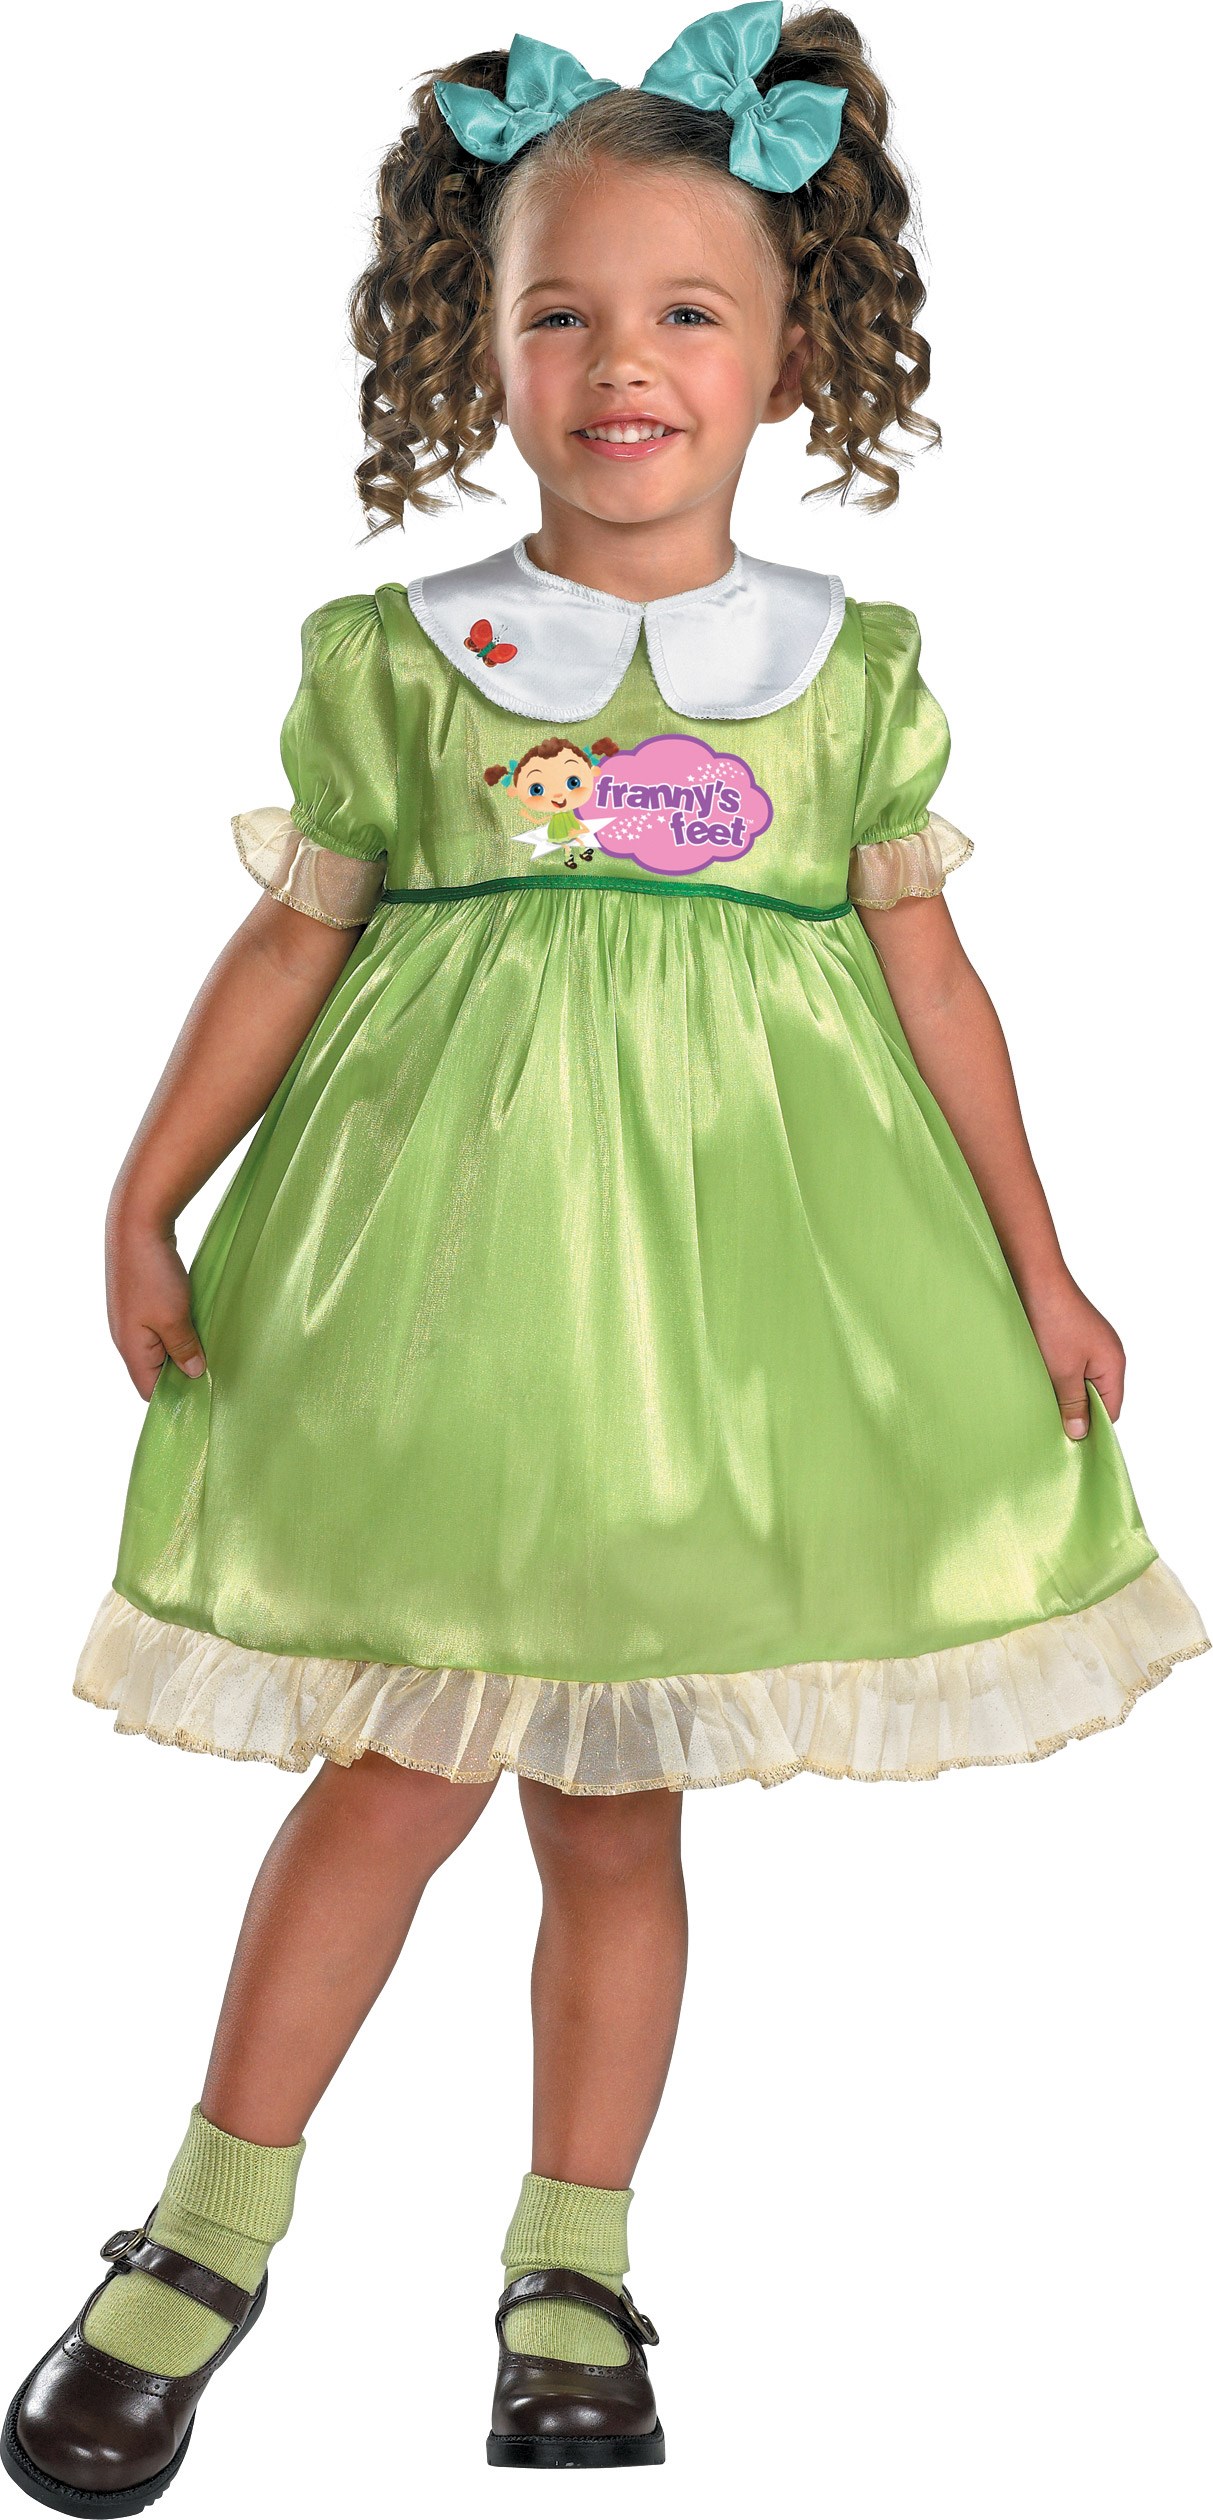 Franny Classic Toddler Costume